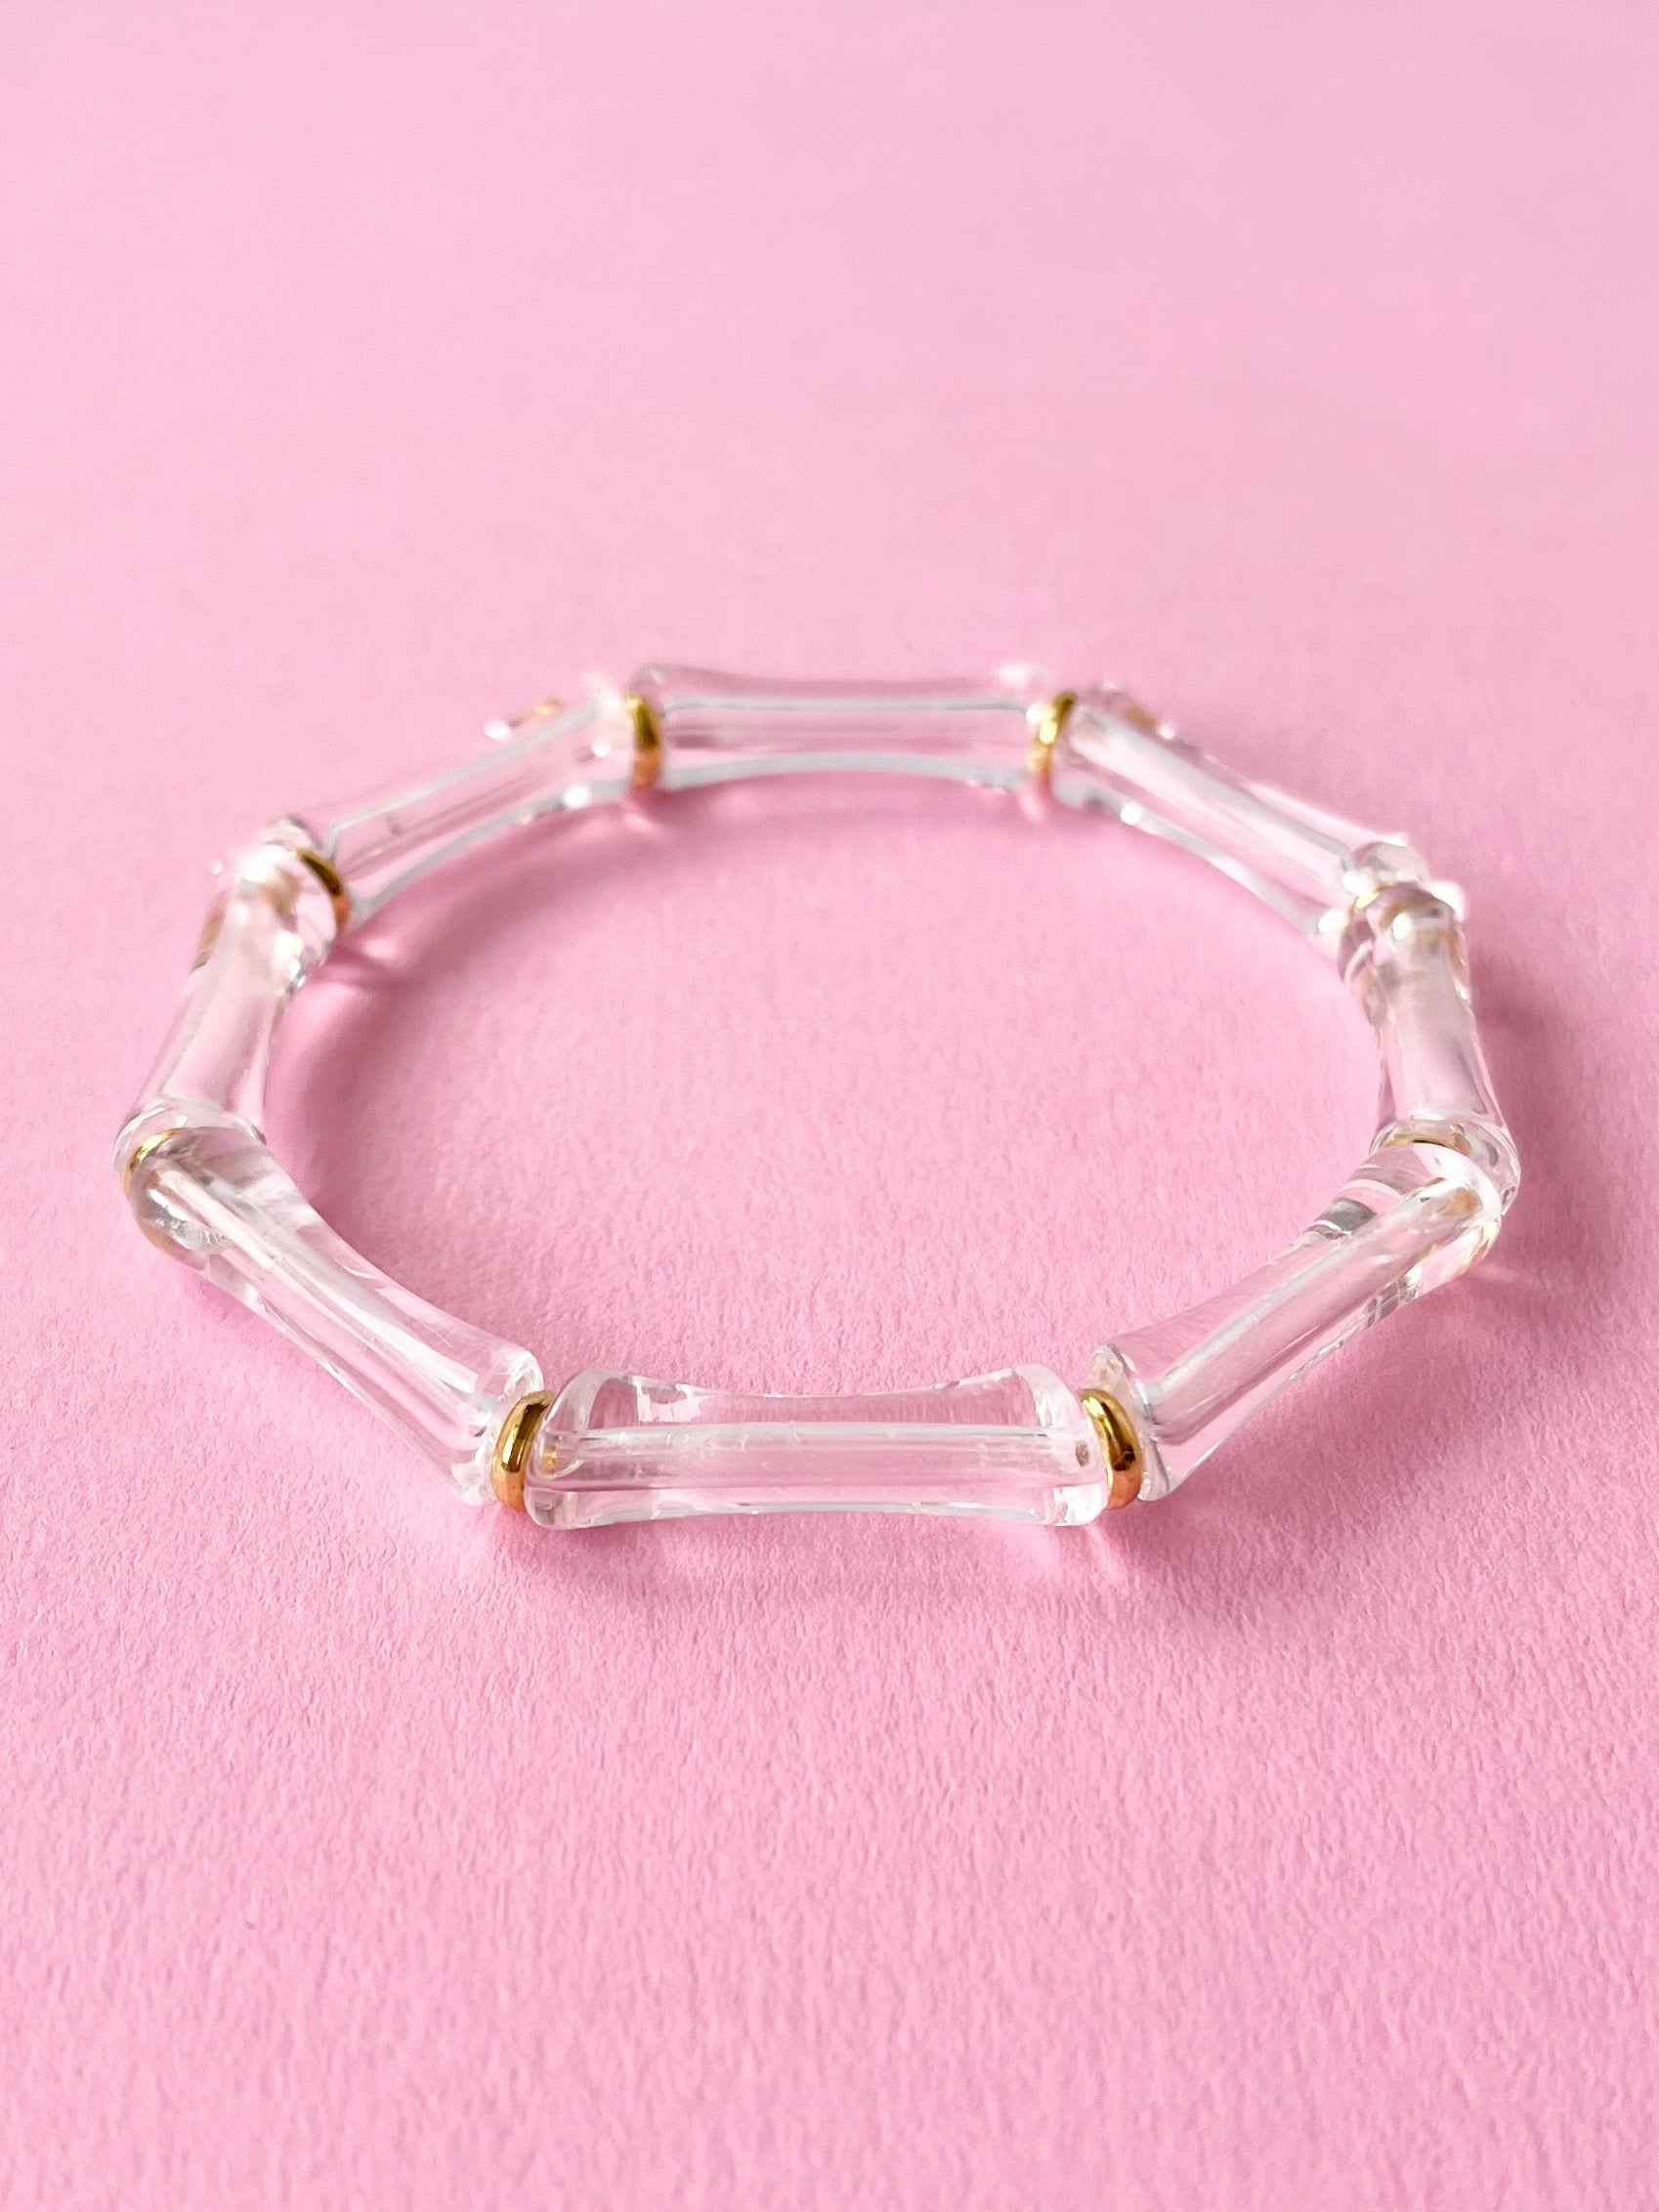 clear acrylic bangle bracelet